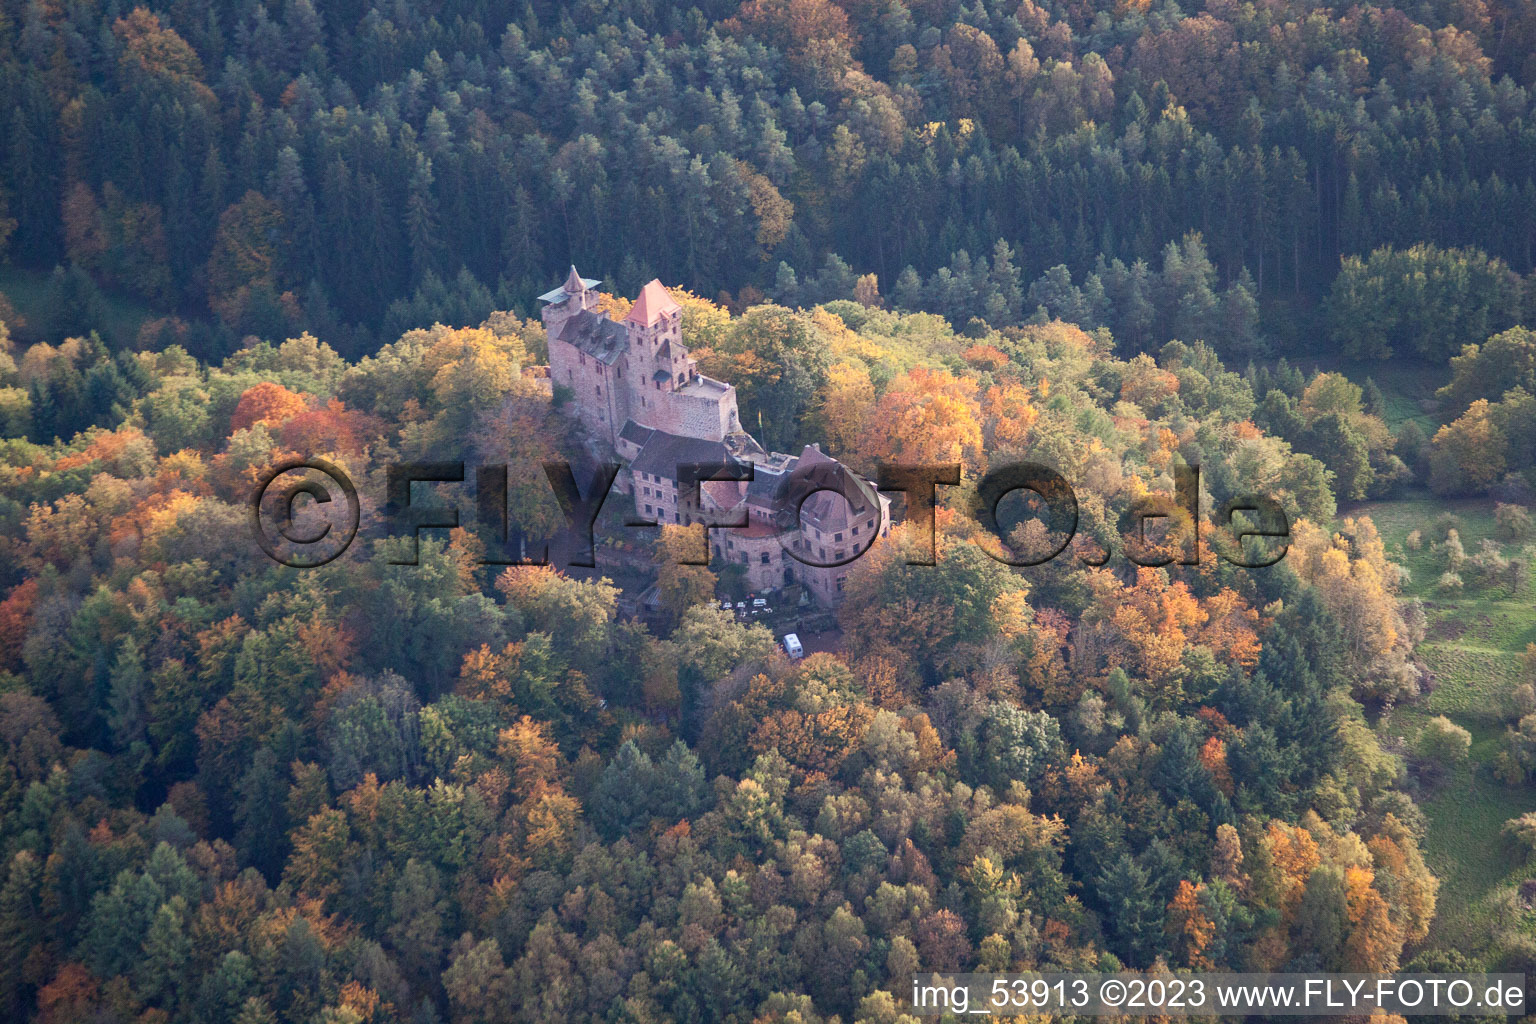 Drone image of Berwartstein Castle in Erlenbach bei Dahn in the state Rhineland-Palatinate, Germany